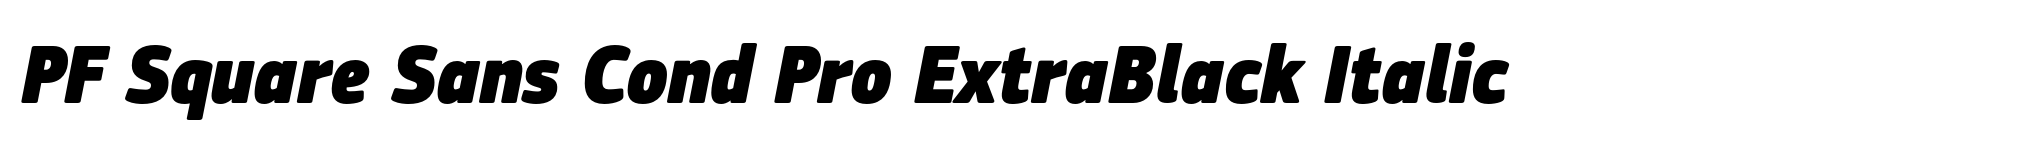 PF Square Sans Cond Pro ExtraBlack Italic image